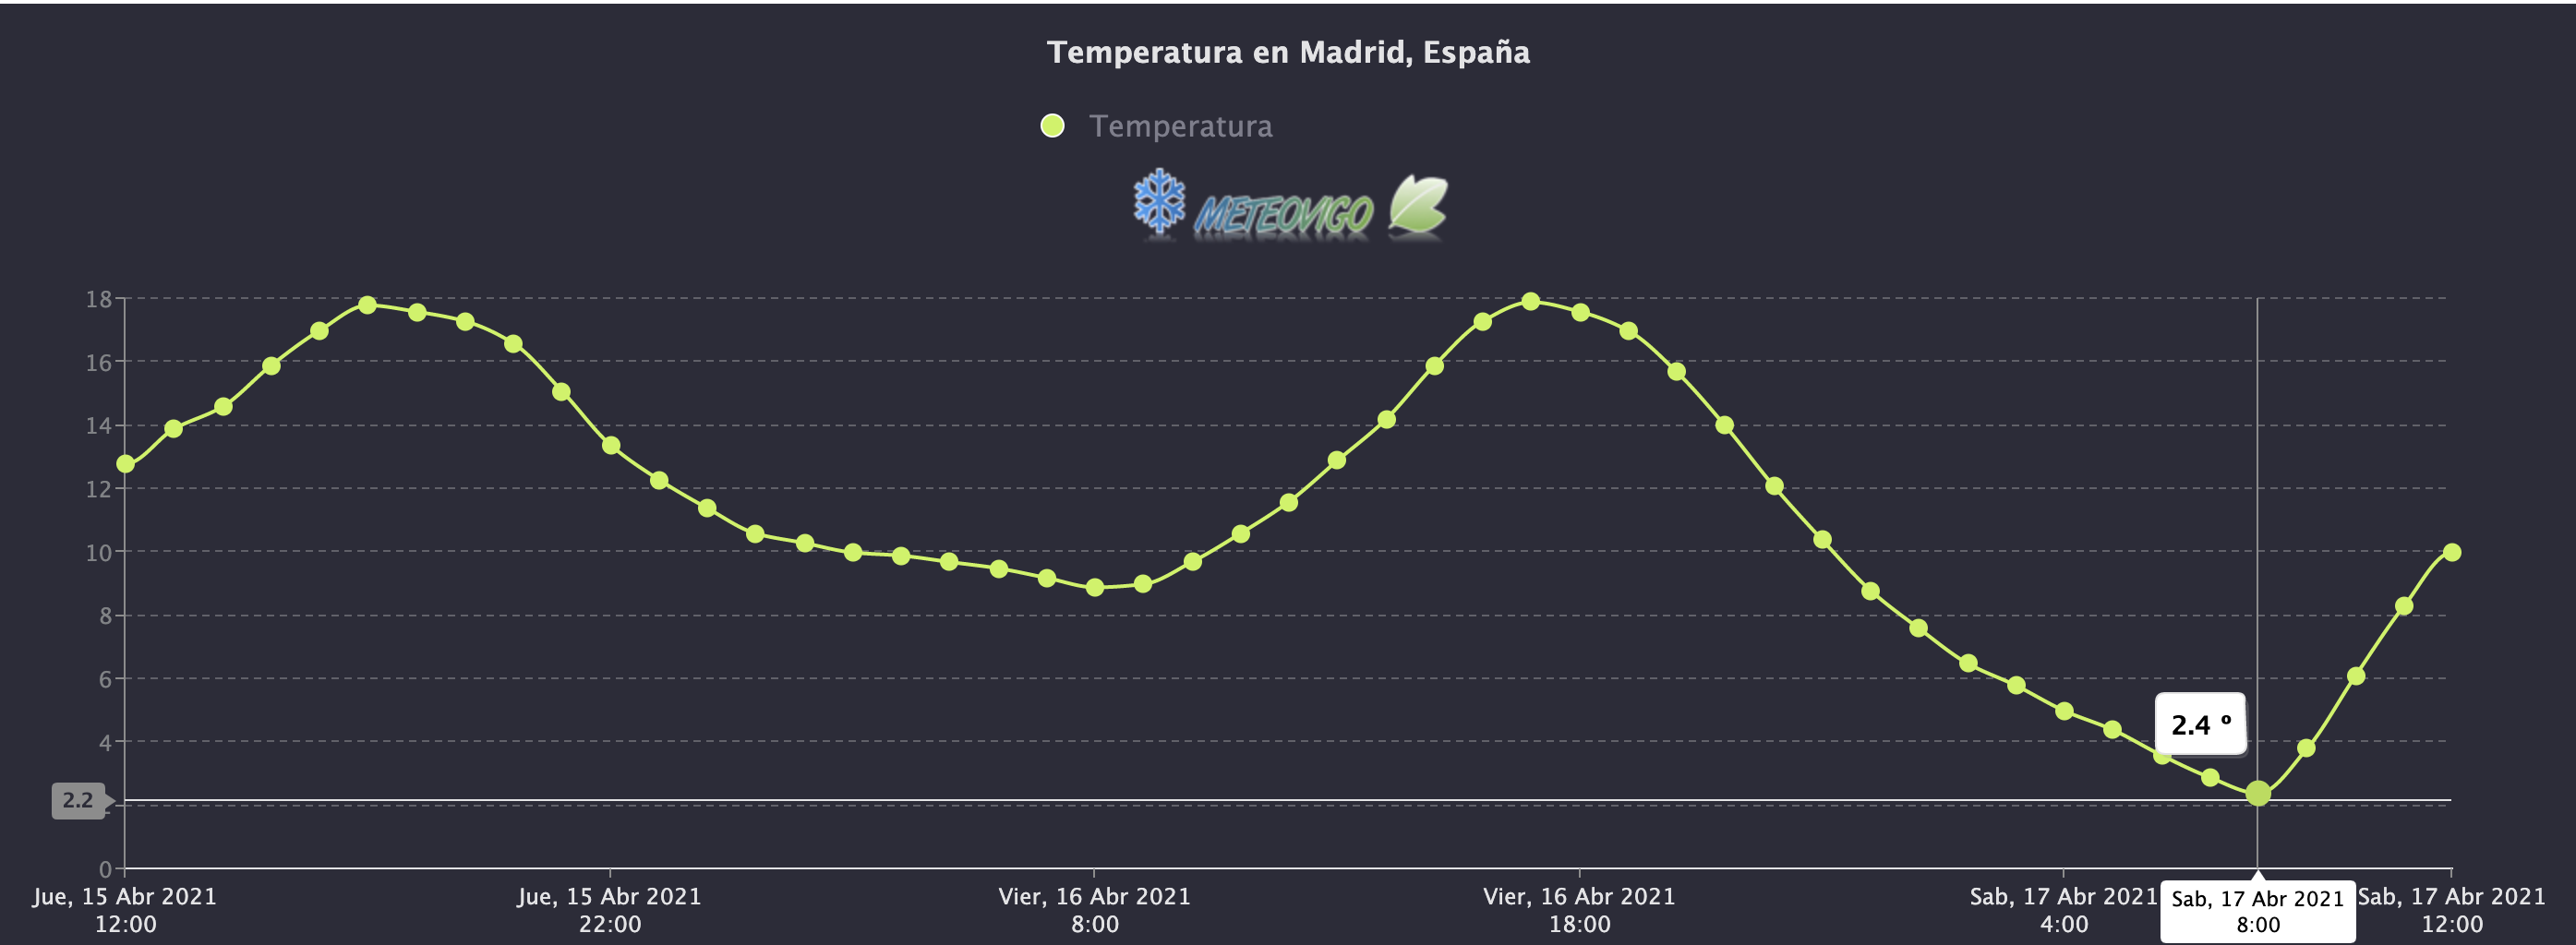 Temperaturas en Madrid